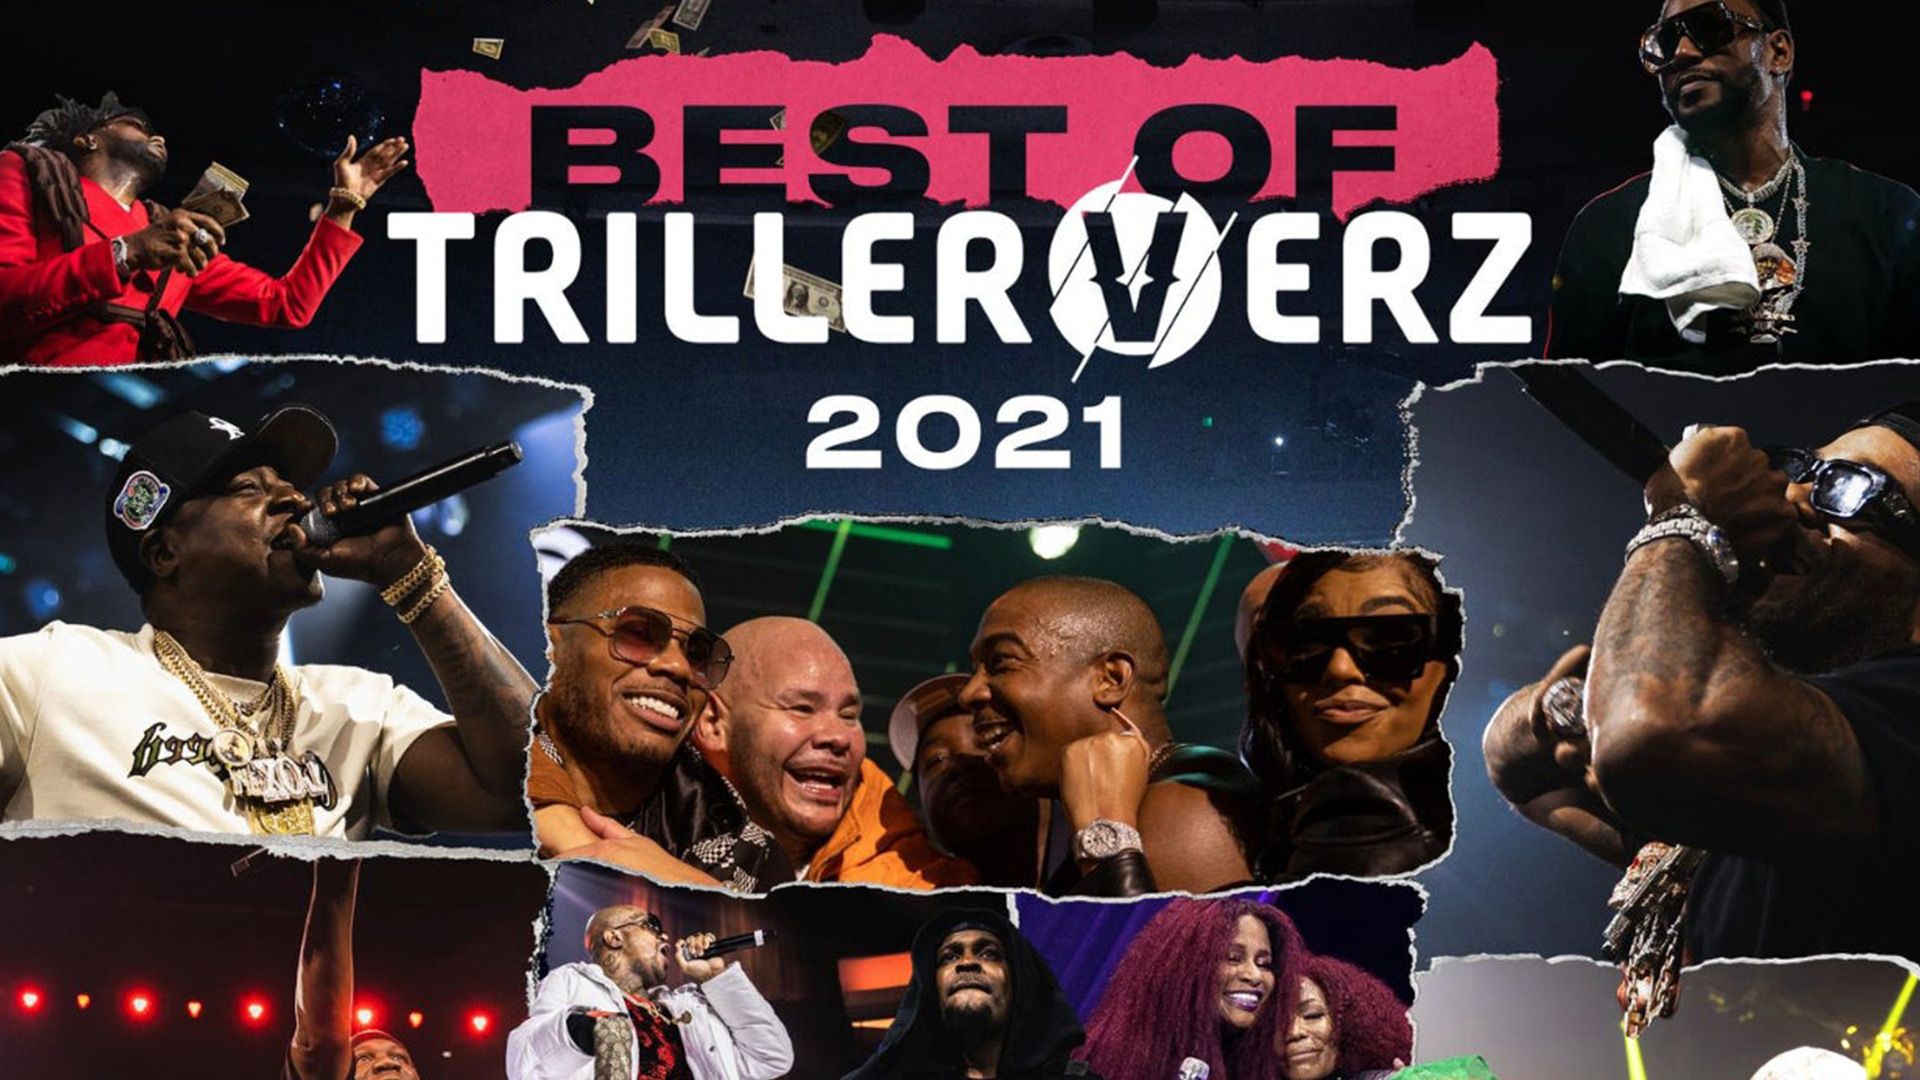 Watch the Best of TrillerVerz 2021